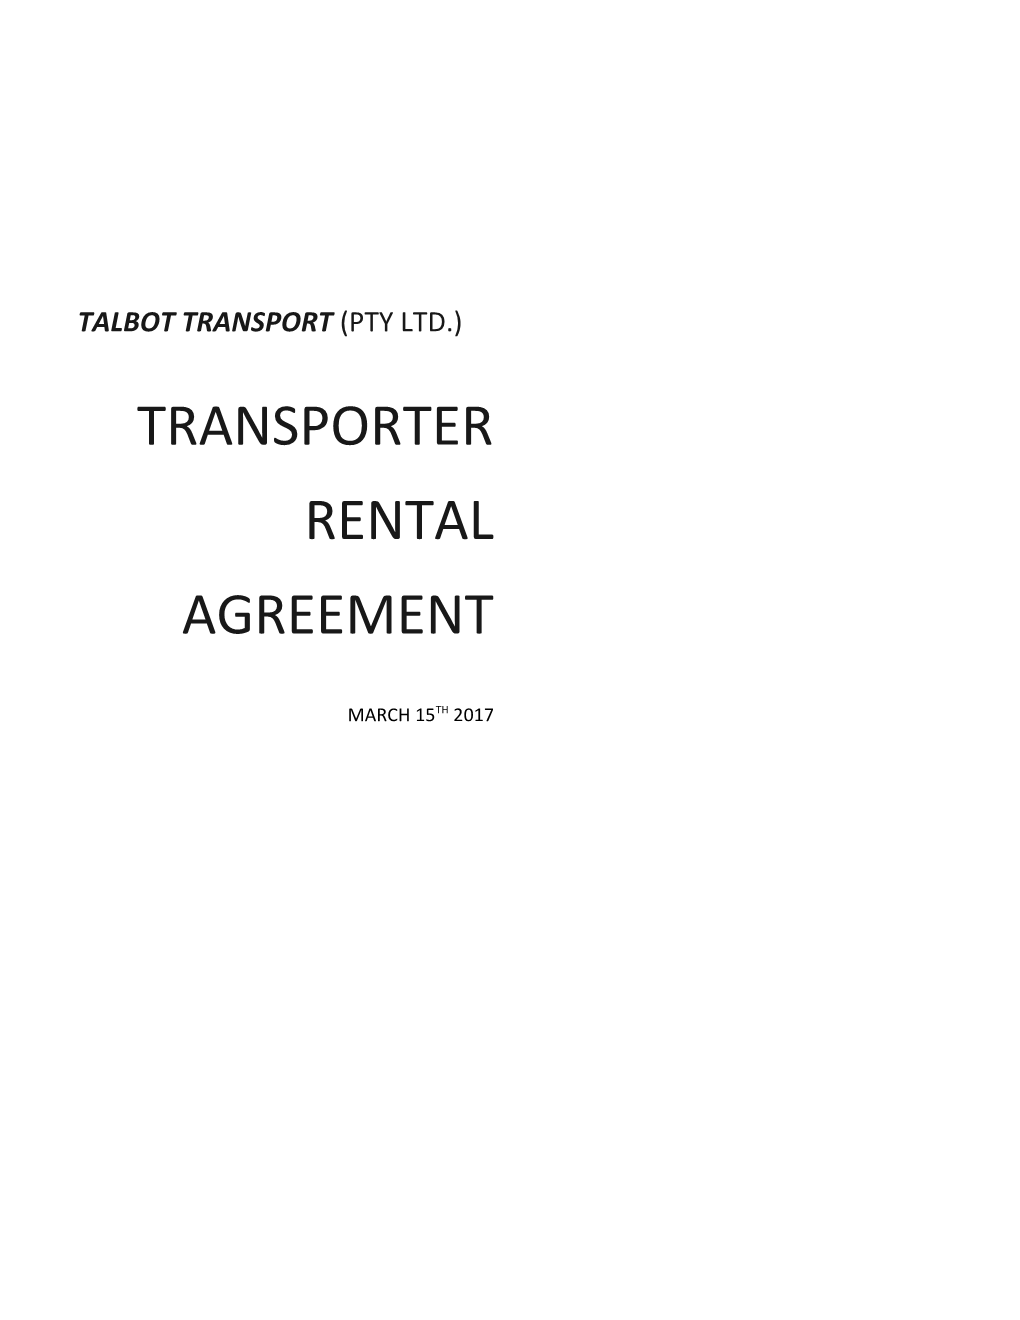 Talbot Transport (Pty Ltd.)